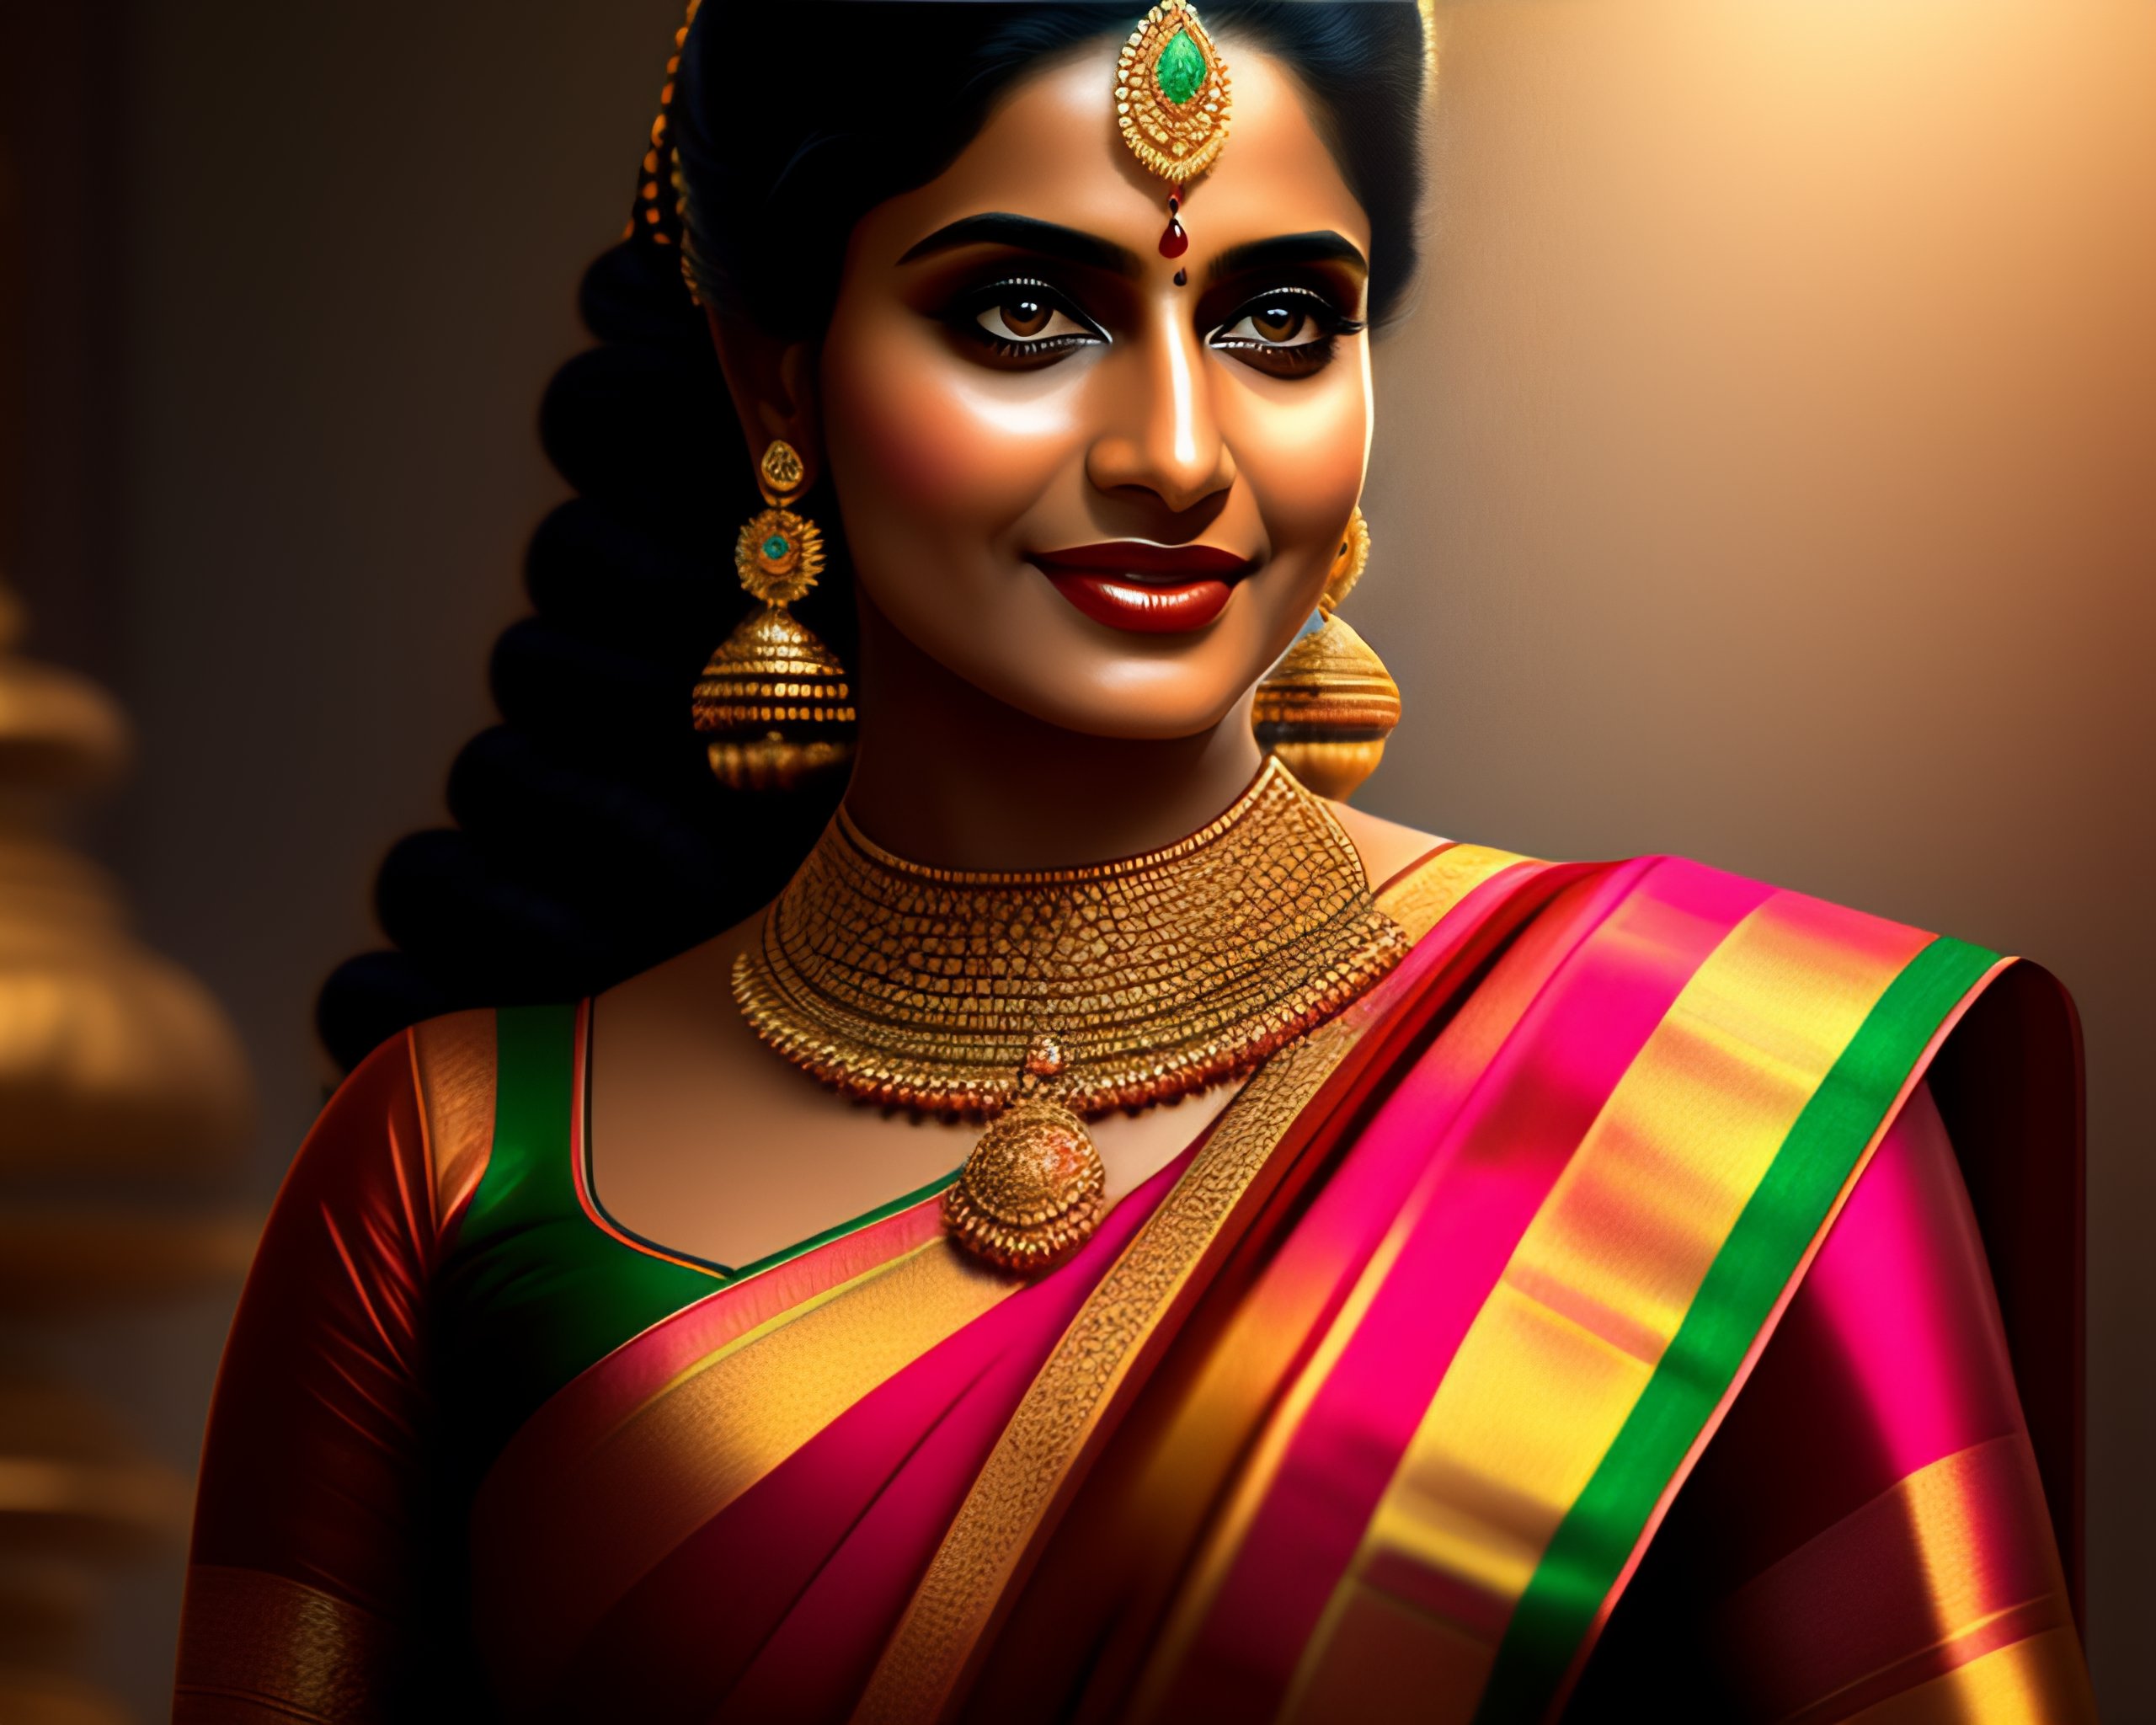 Lexica - Pleasant Kerala woman in a tight saree, Natural light ...